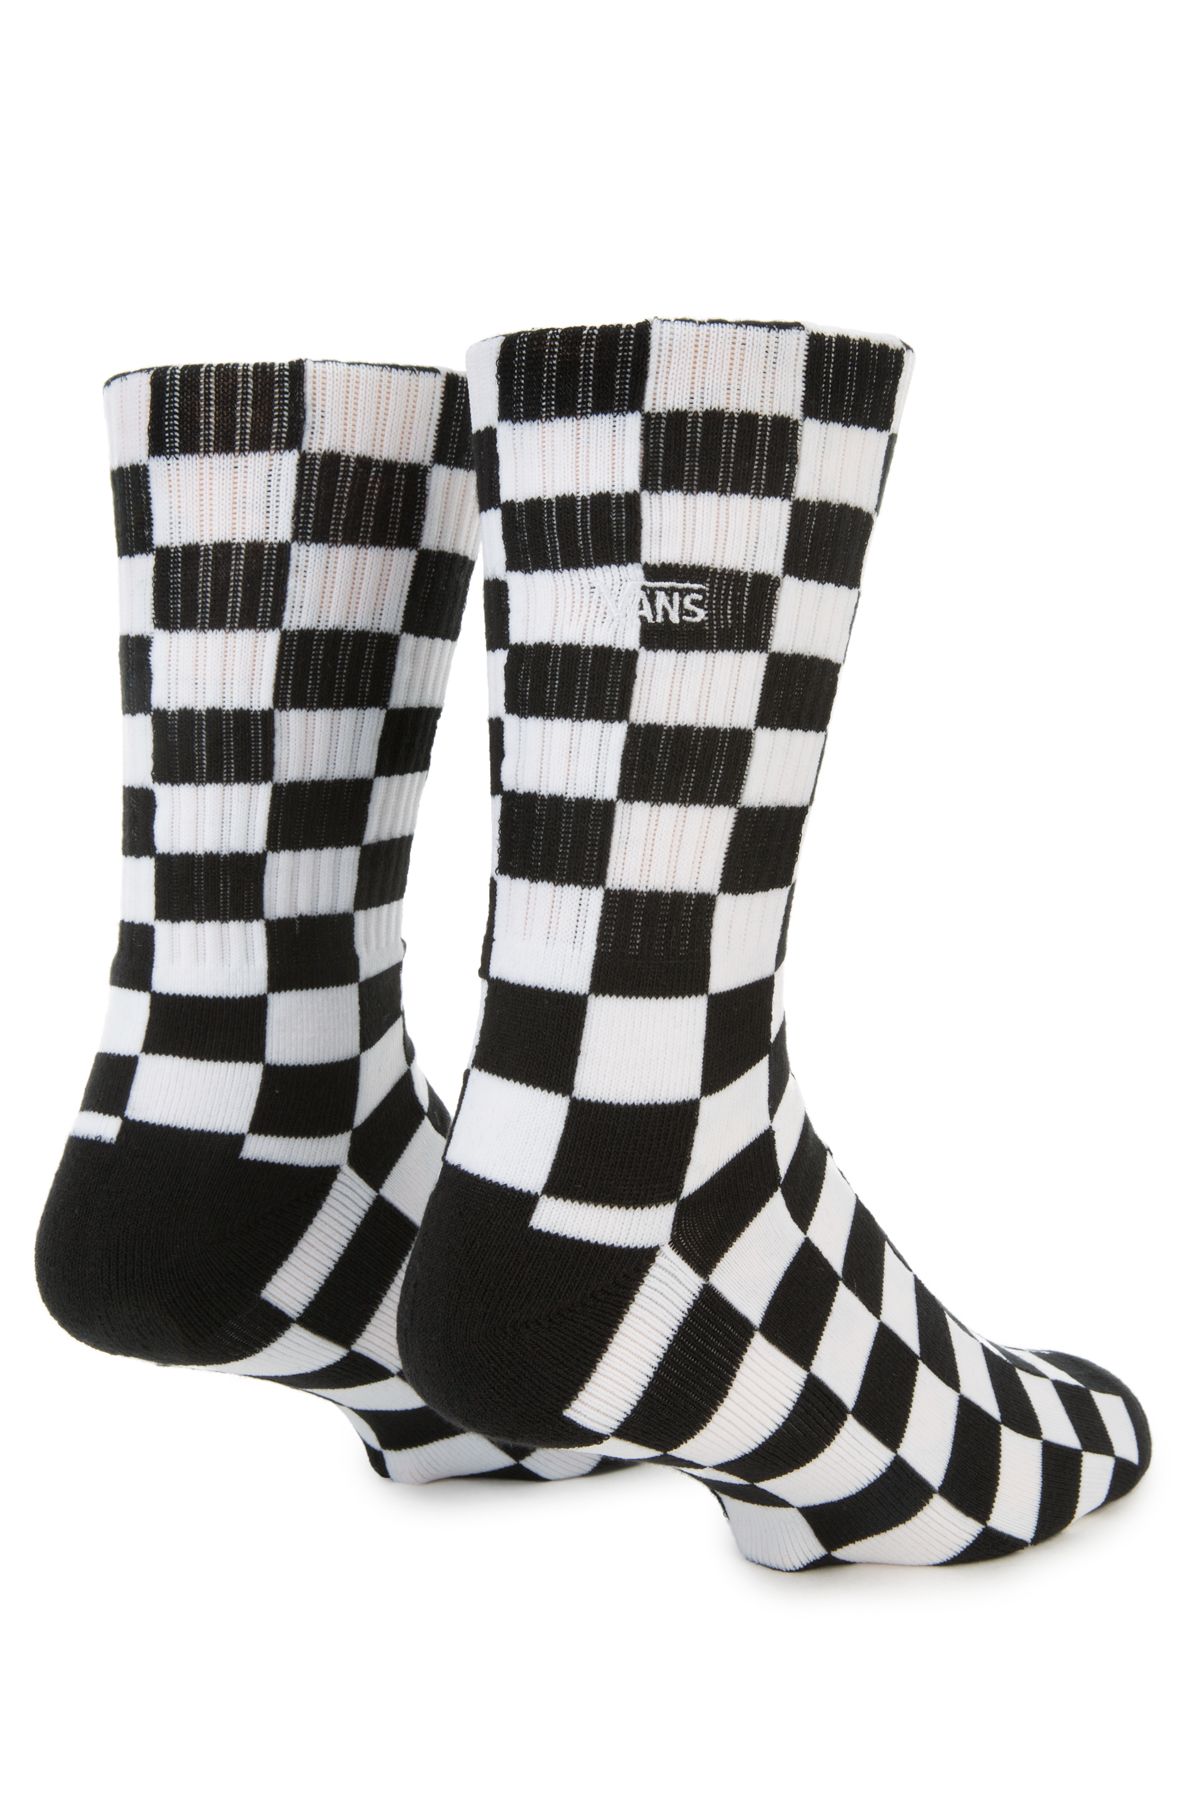 VANS Checkerboard Crew Socks in Black/White VN0A3H3OHU0 - Shiekh